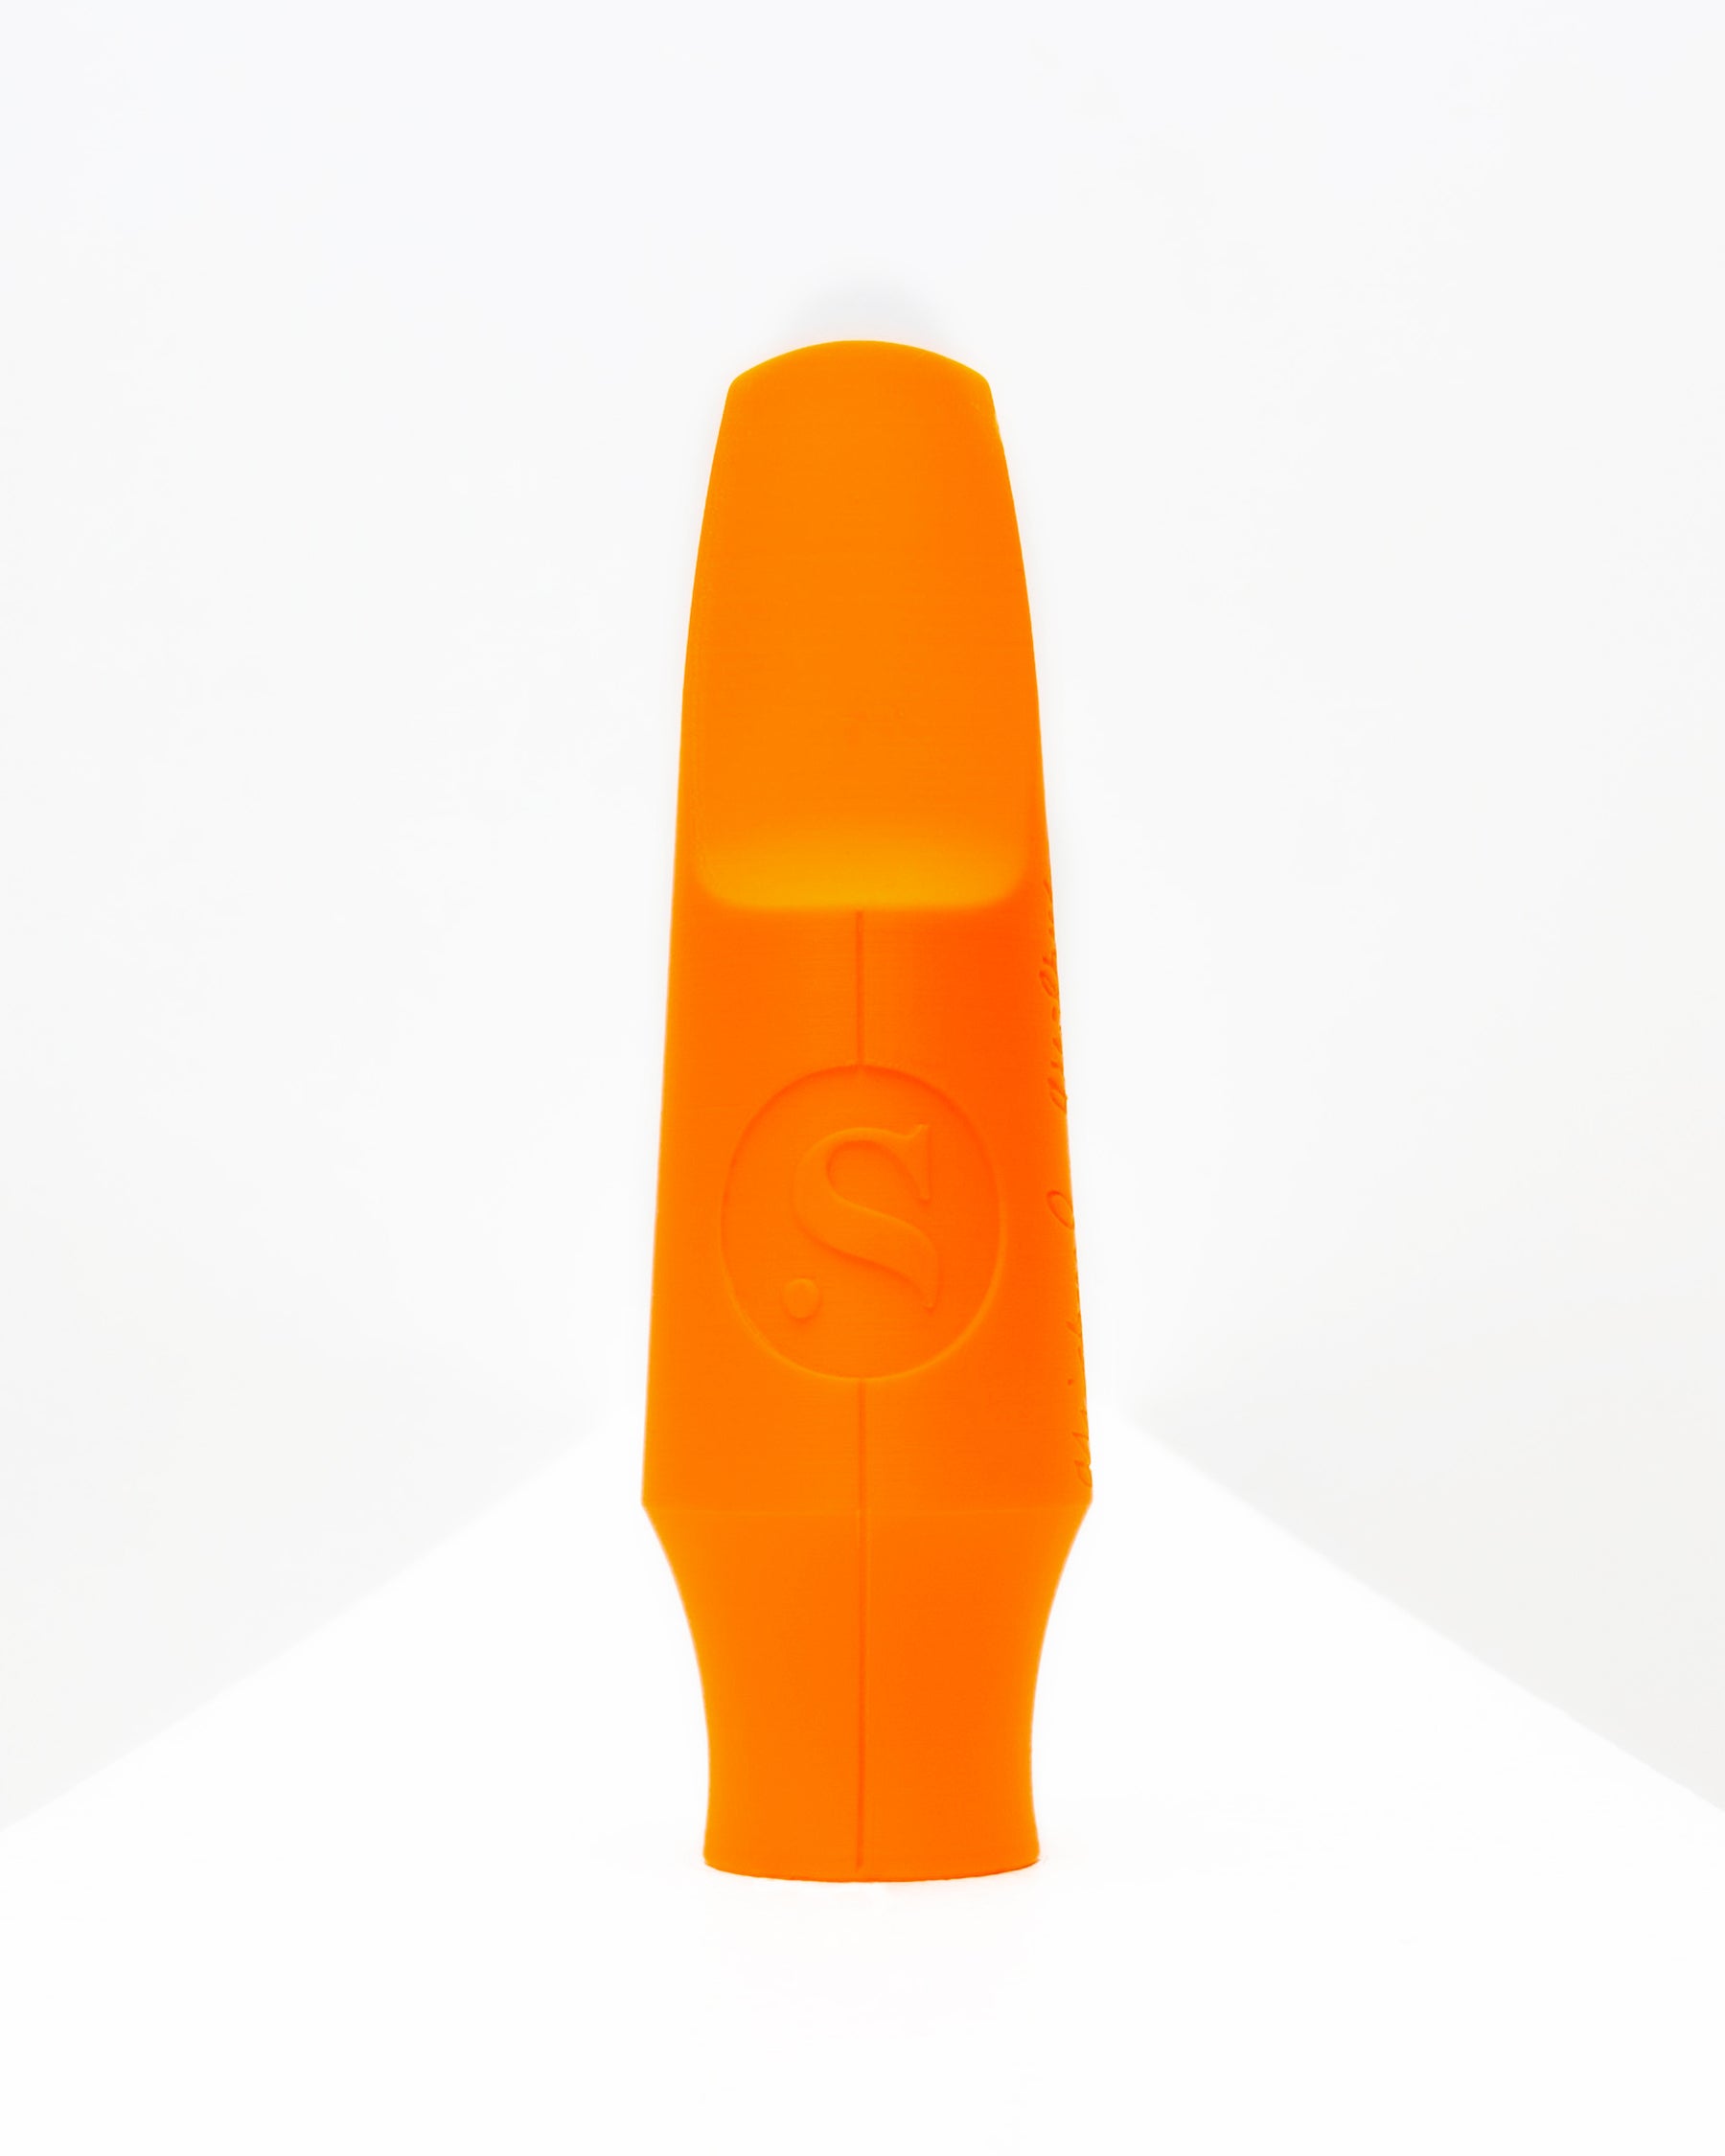 Tenor Signature Saxophone mouthpiece - Tivon Pennicott by Syos - 9 / Lava Orange